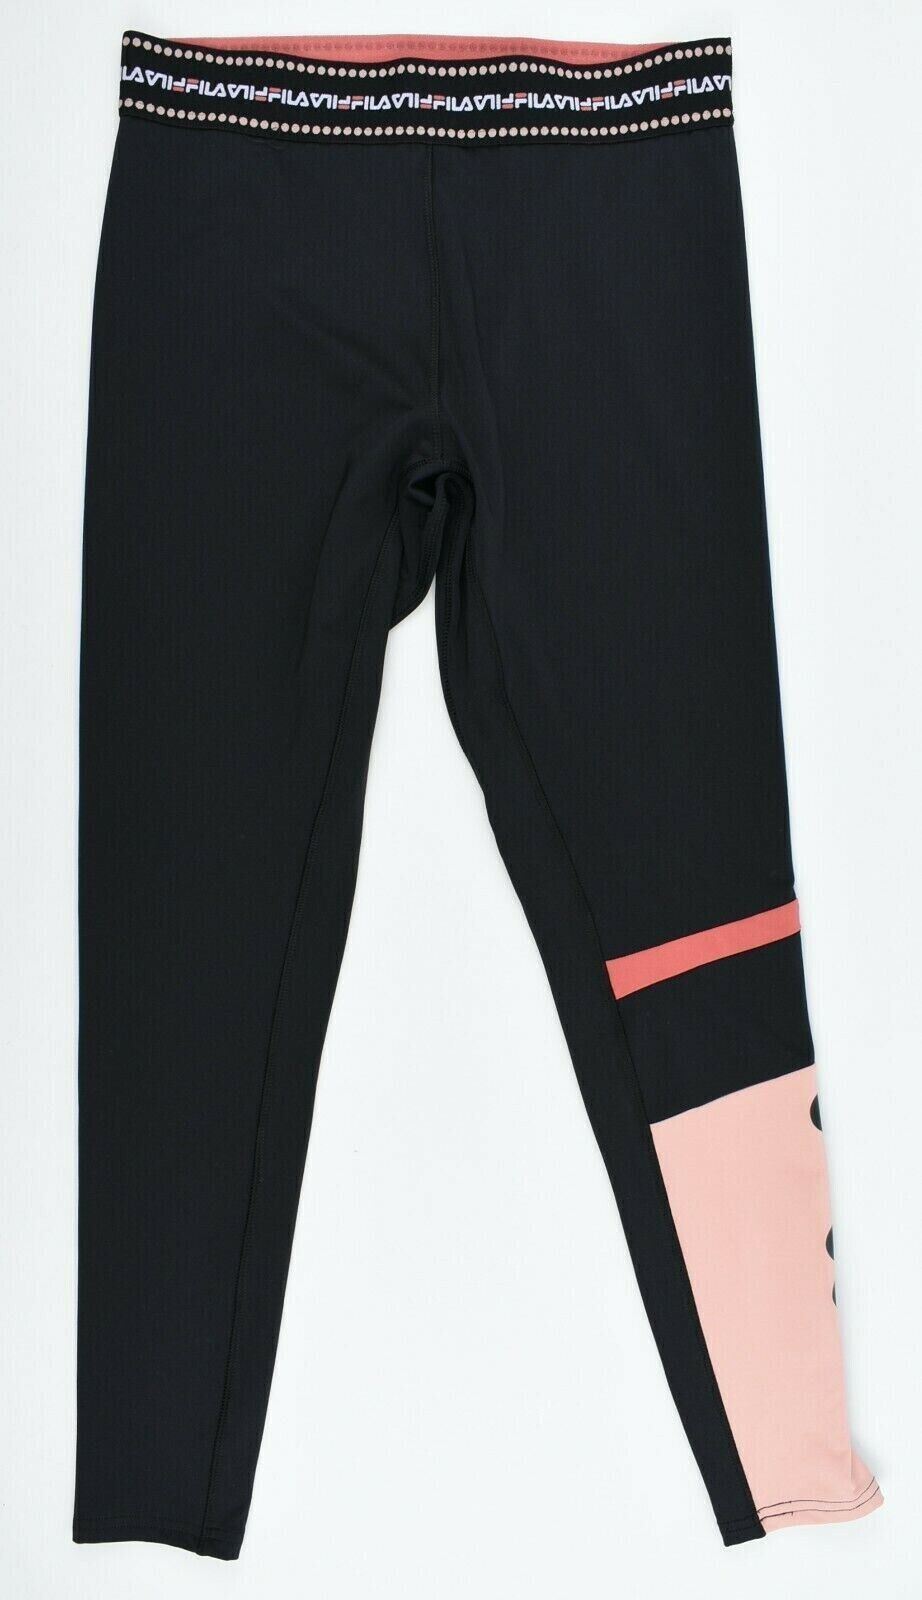 FILA Womens SANYA Activewear Gym Leggings, Black/Pink, size SMALL